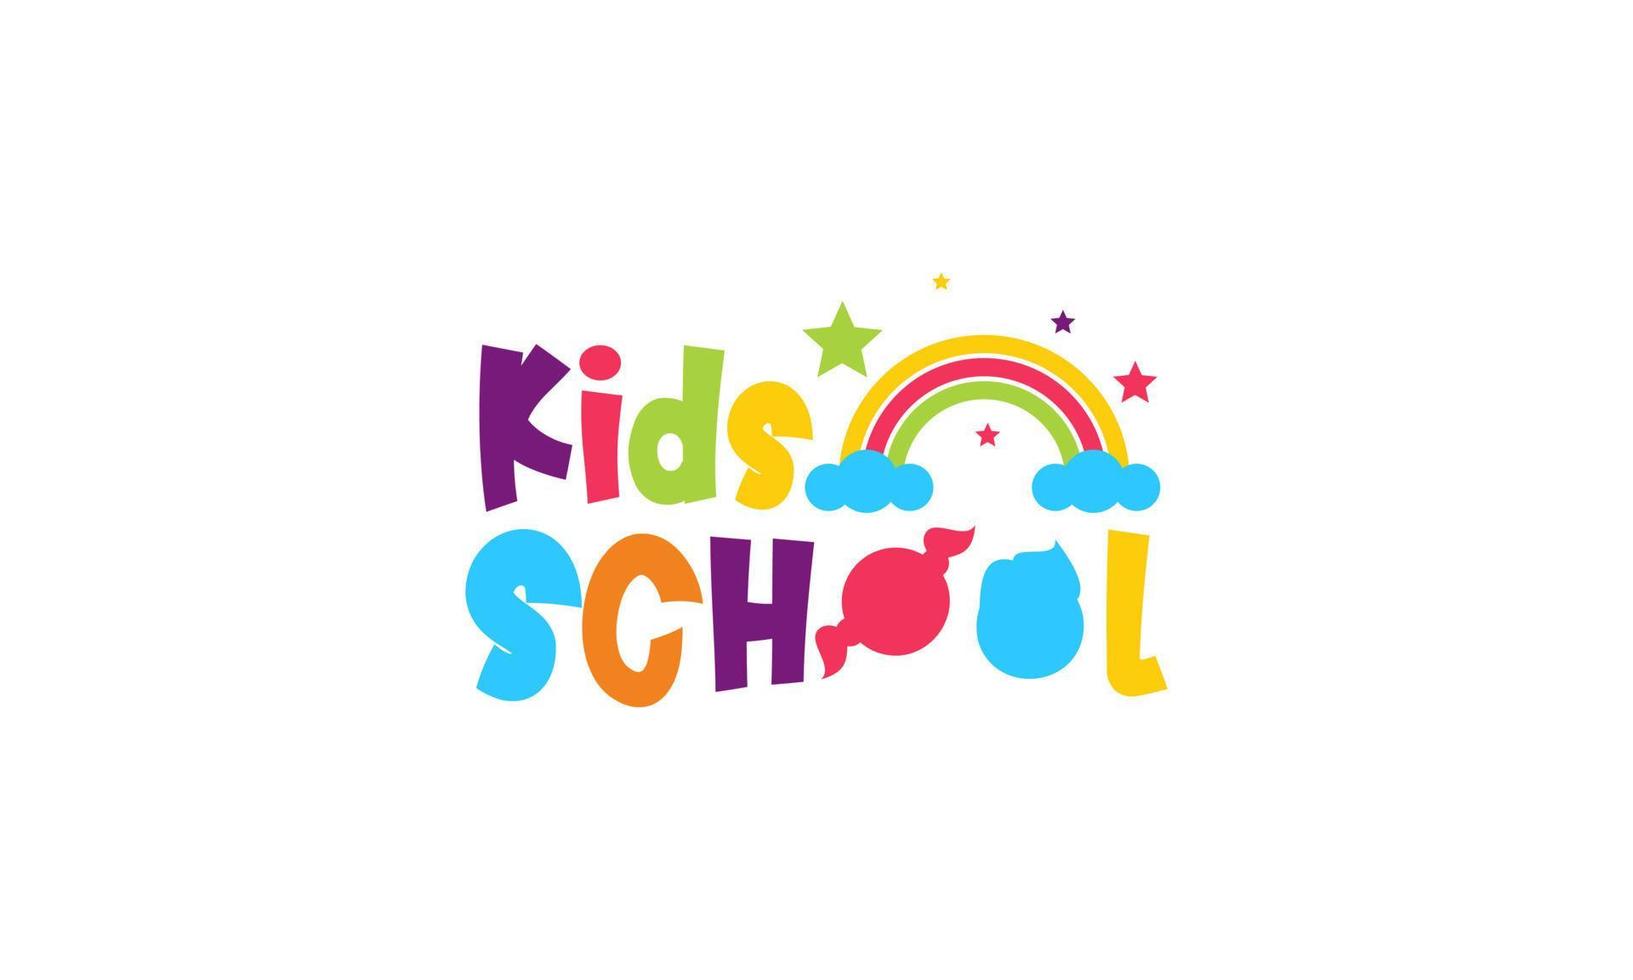 Kiddie school elementary colorful vector logo design illustration